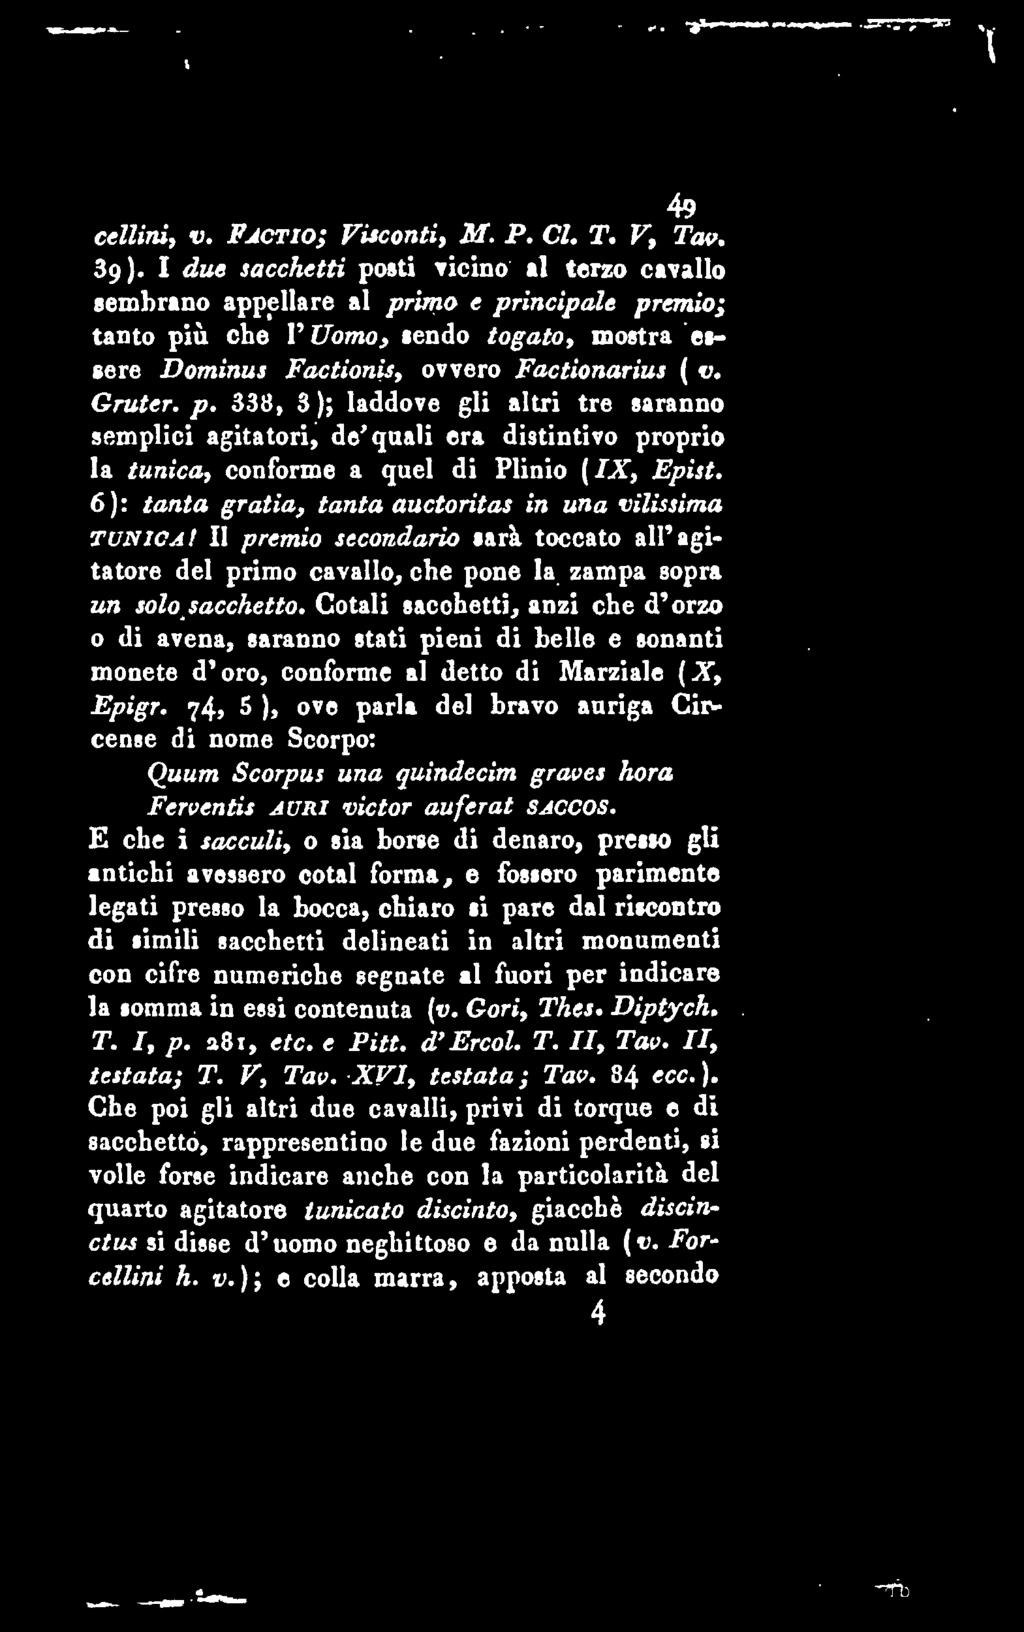 49 Cellini, v. Fjctio; Visconti, M, P. Cl. T. V, Too. 39).